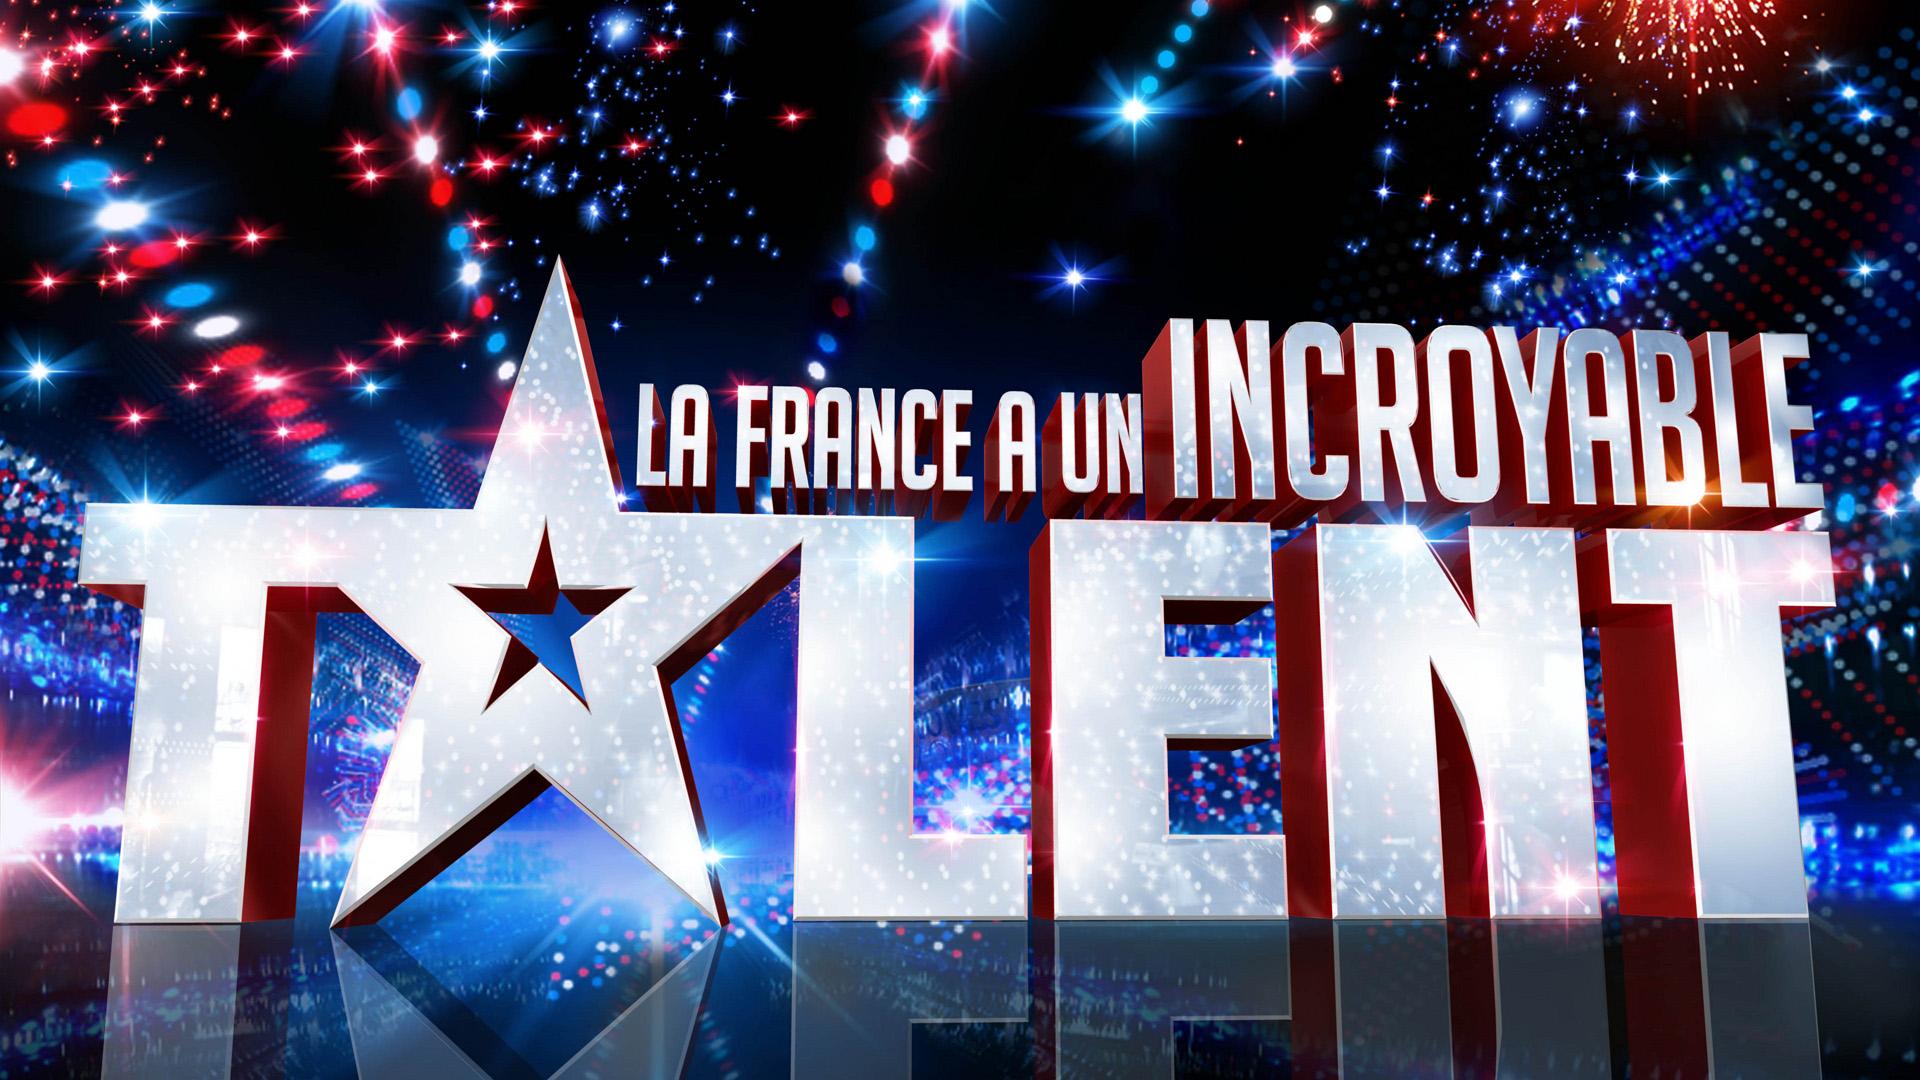 France's Got Talent